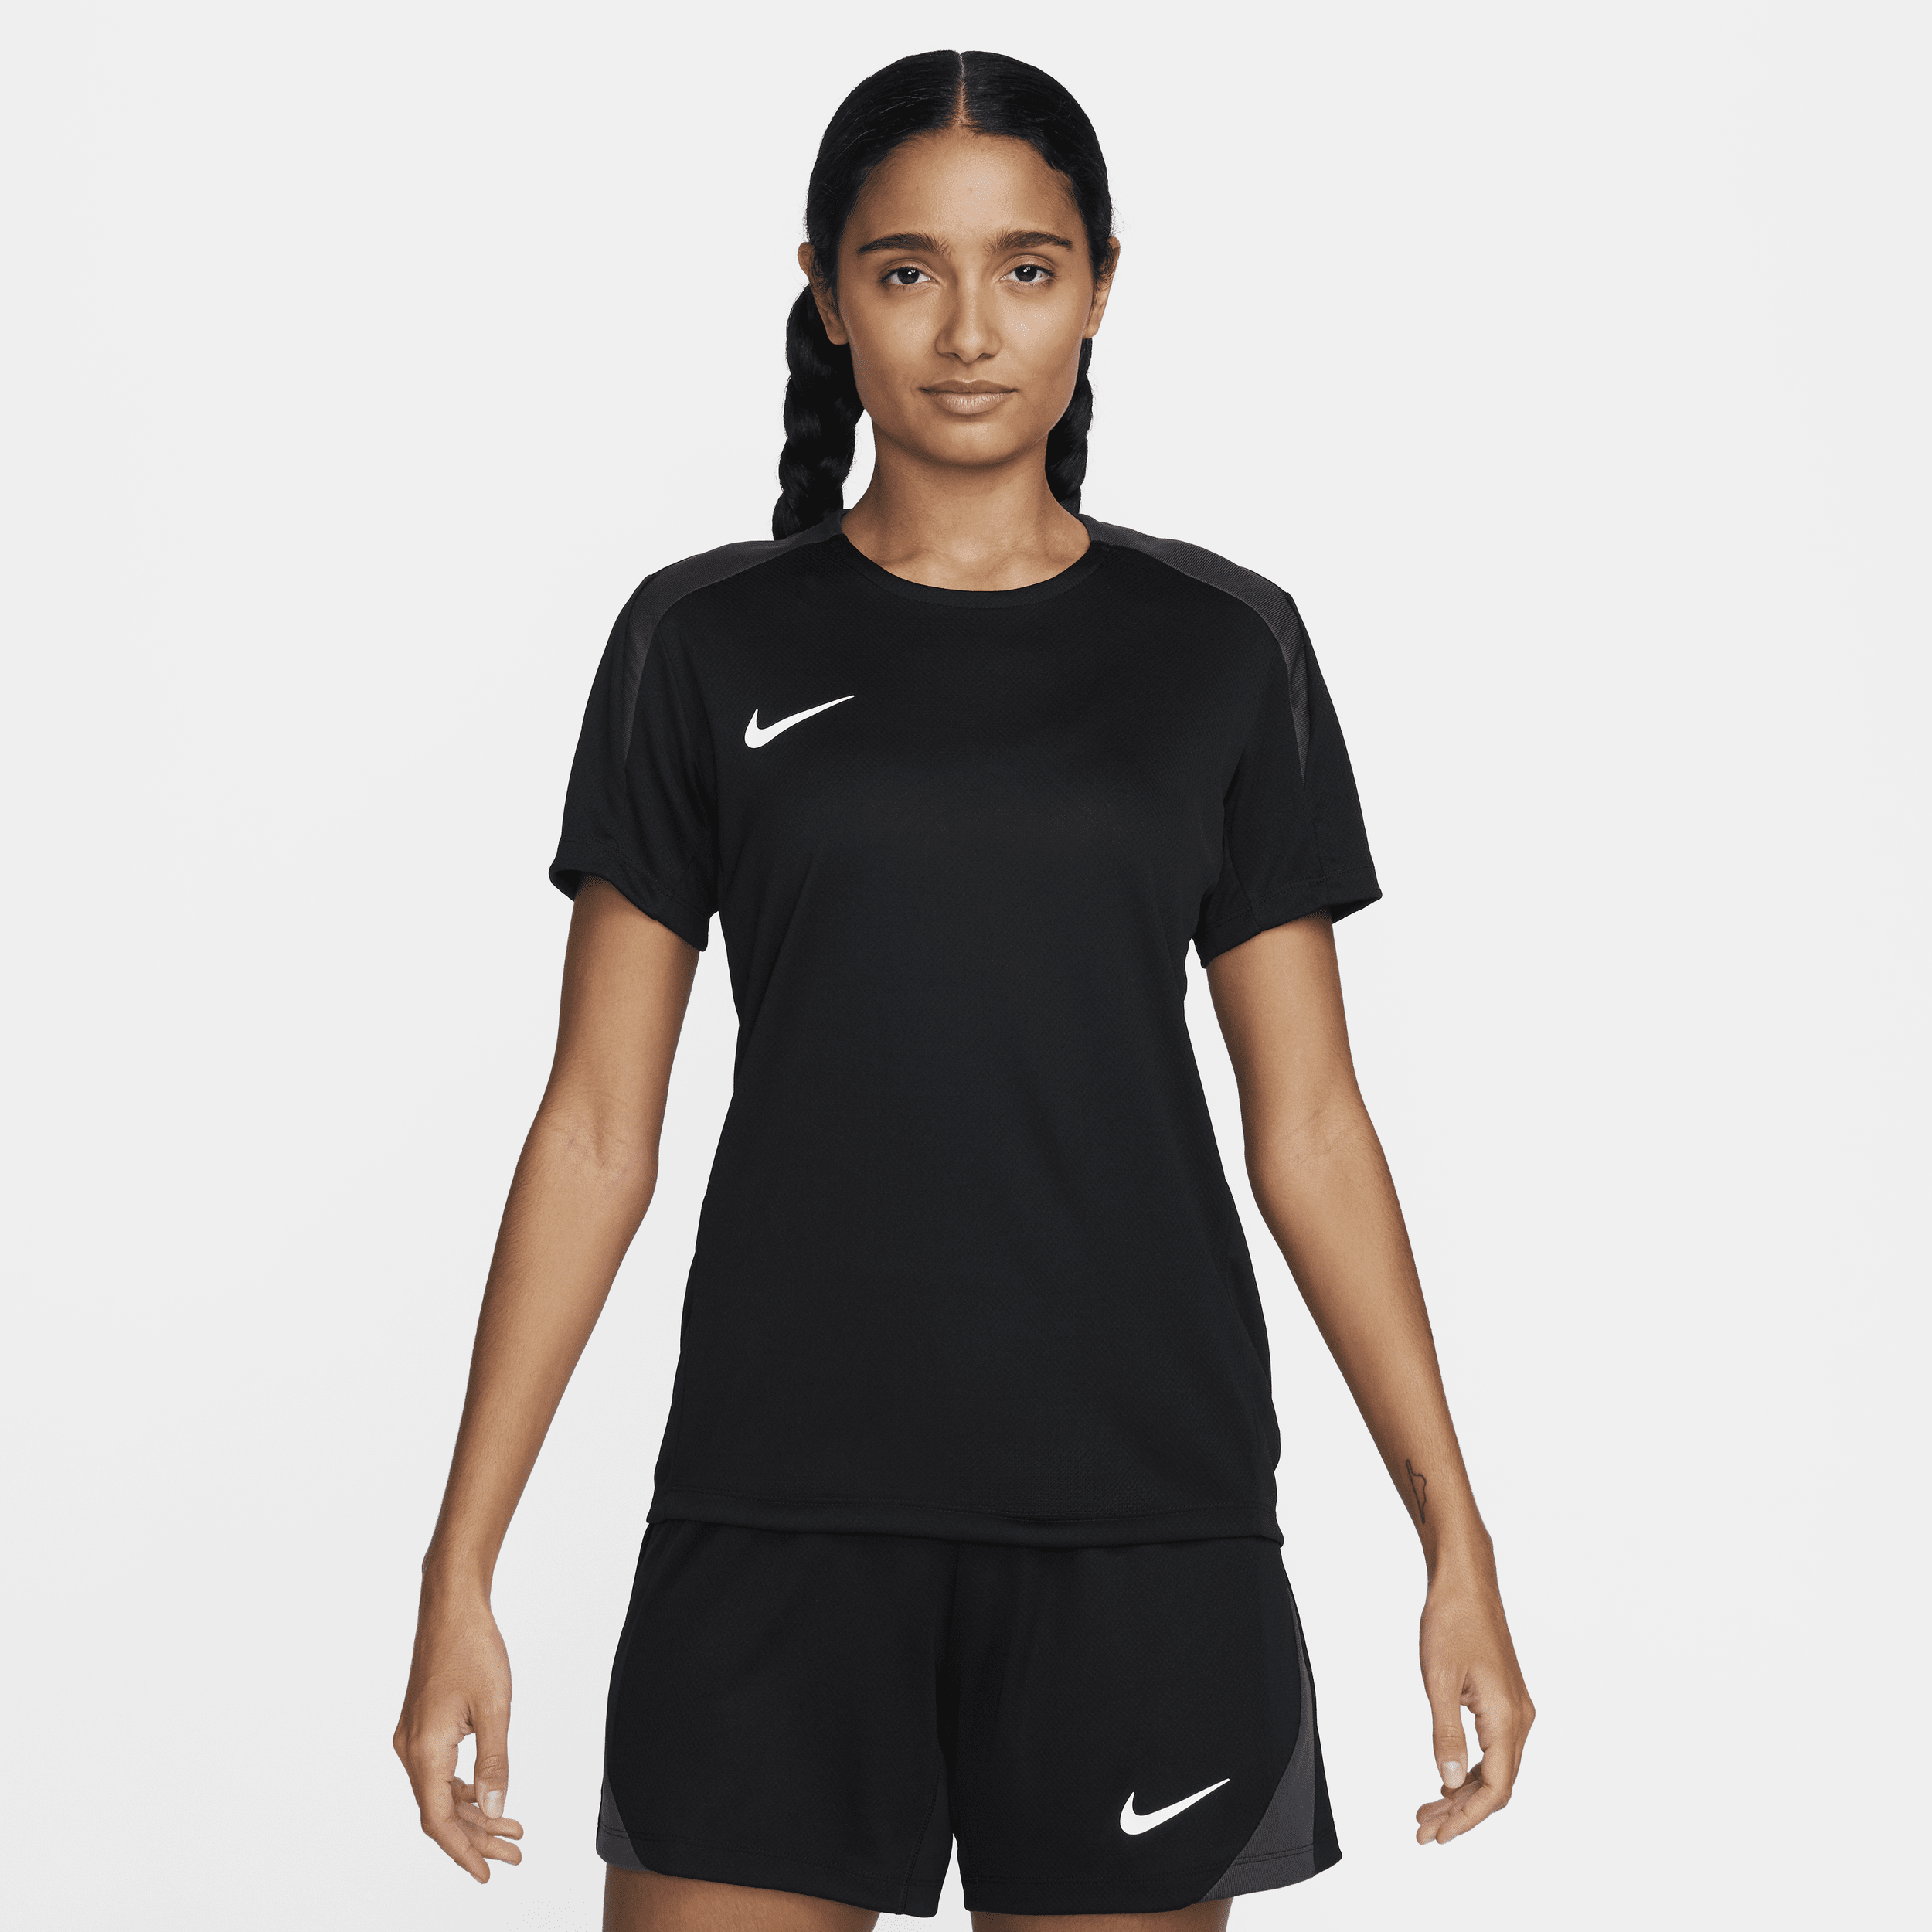 Nike Strike voetbaltop met Dri-FIT en korte mouwen voor dames - Zwart